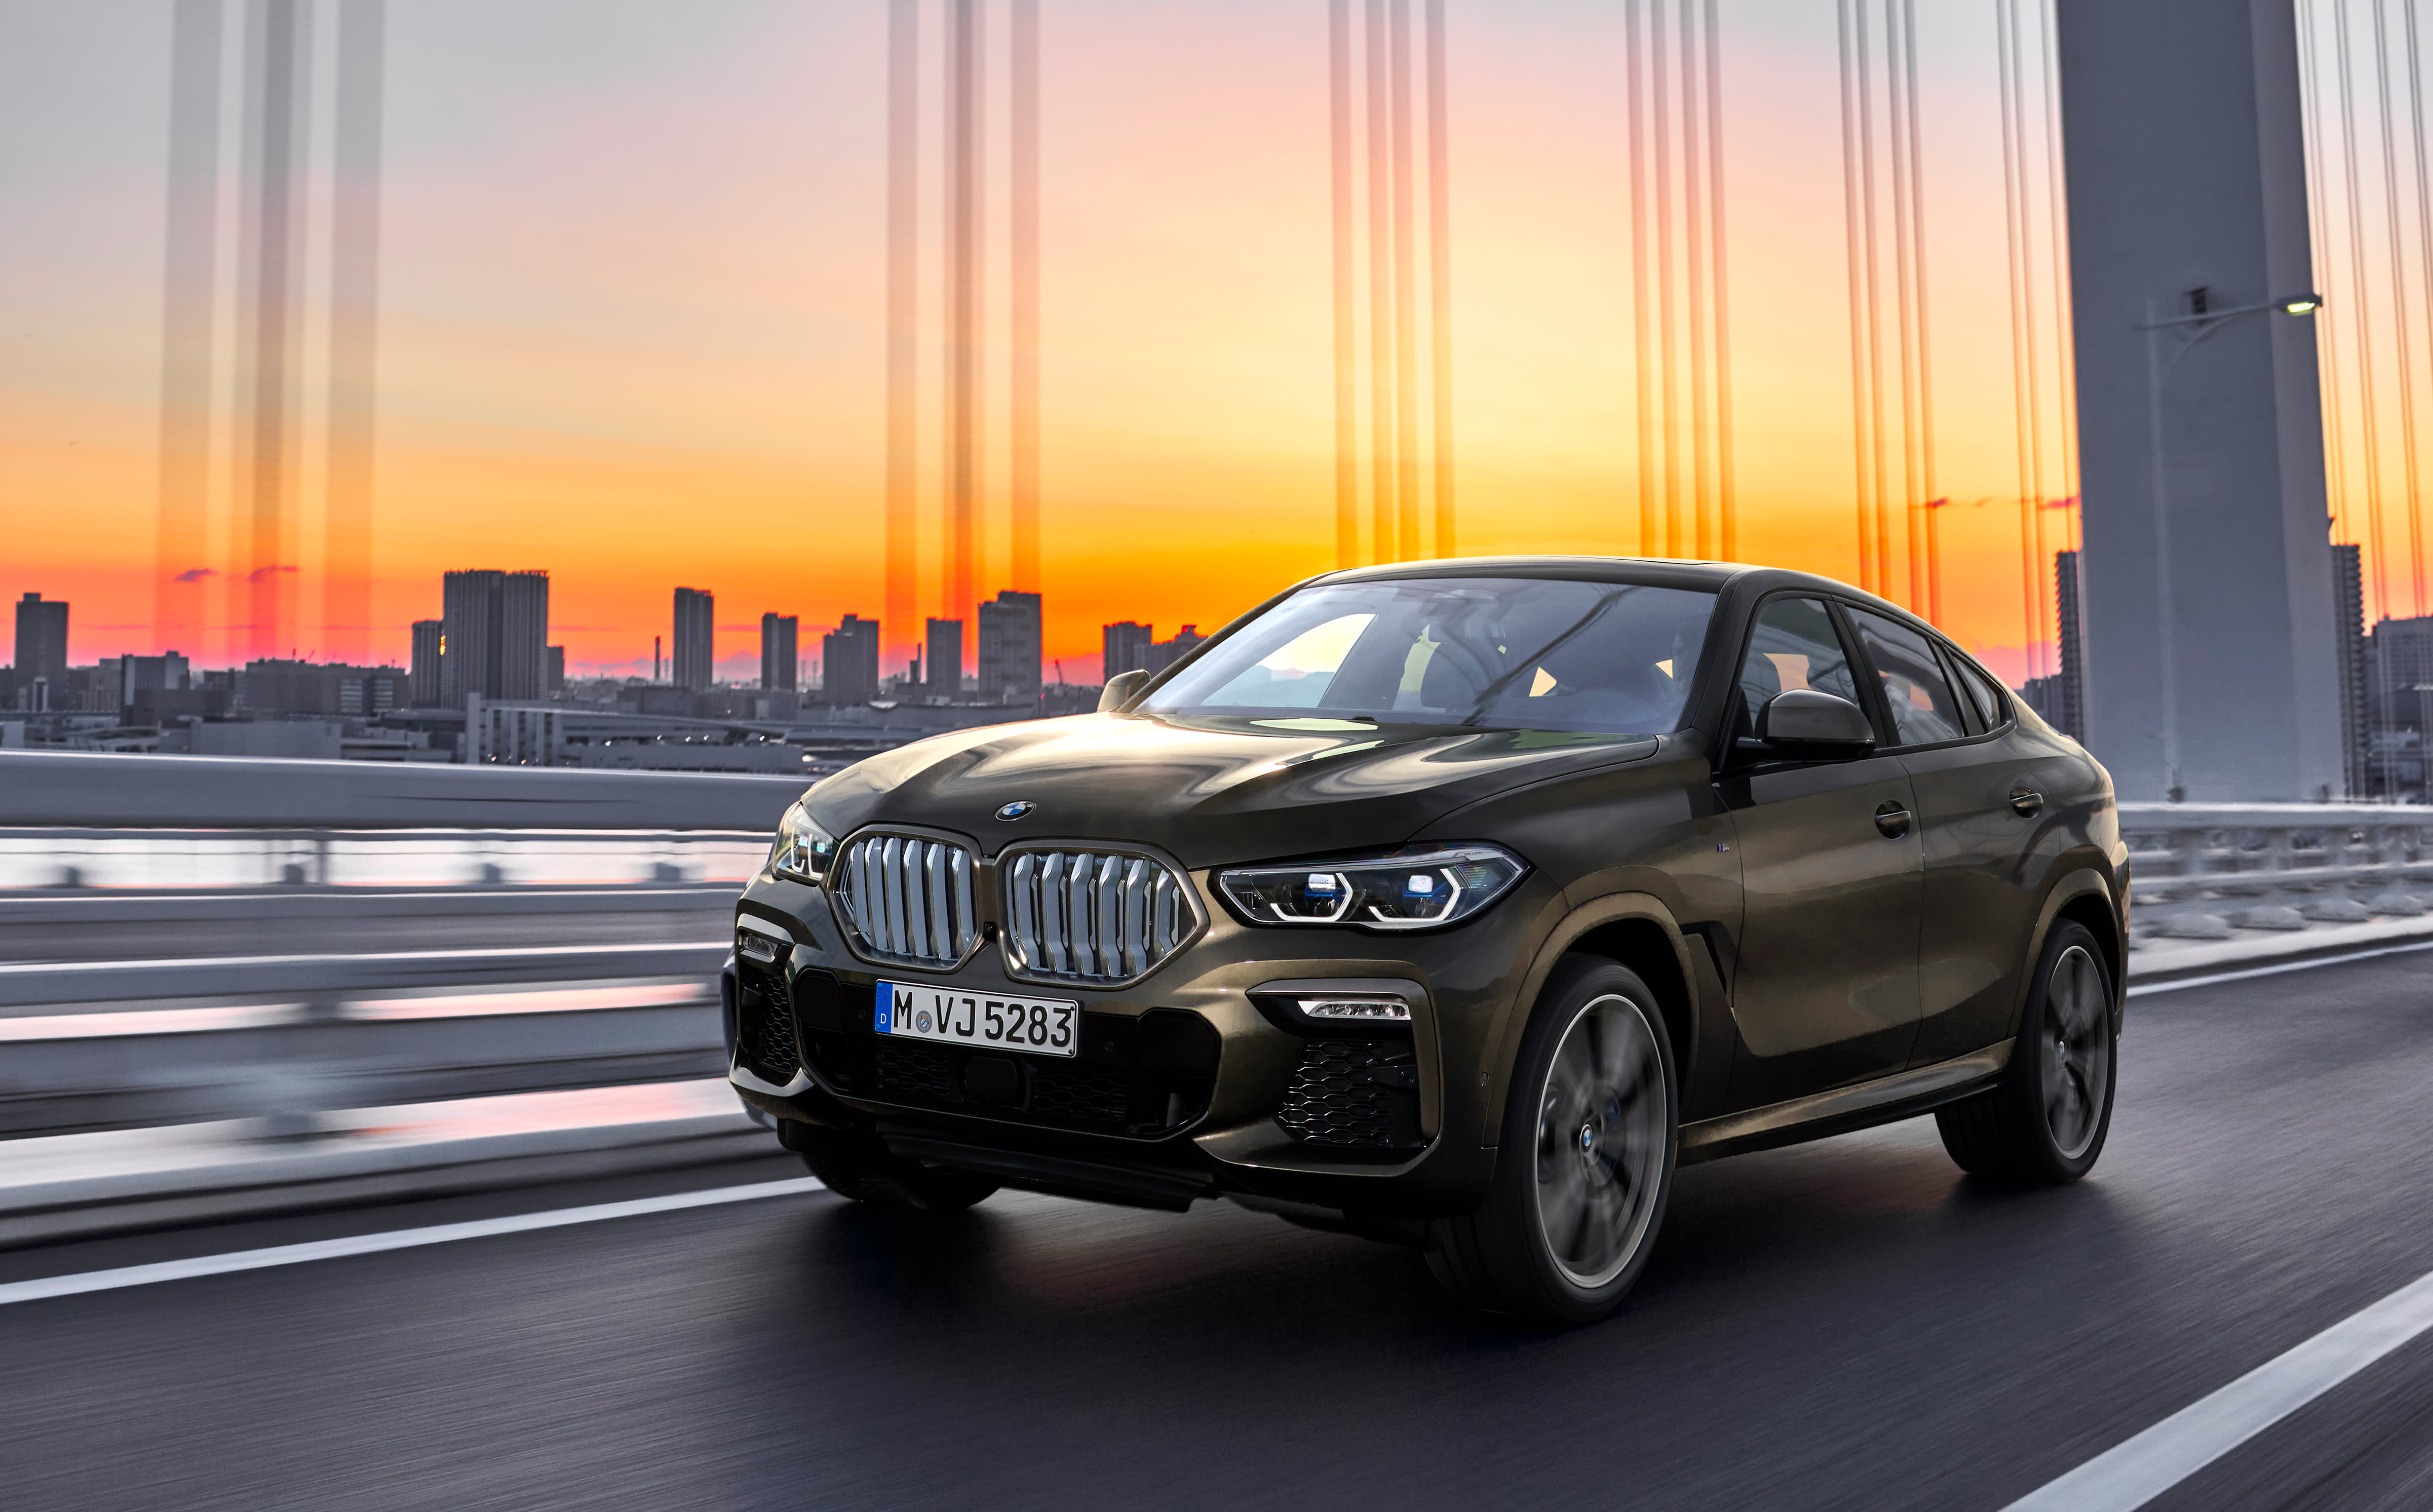 Samuel Polijsten Vertrappen BMW gives its trendsetting 2020 X6 crossover a major makeover in redesign